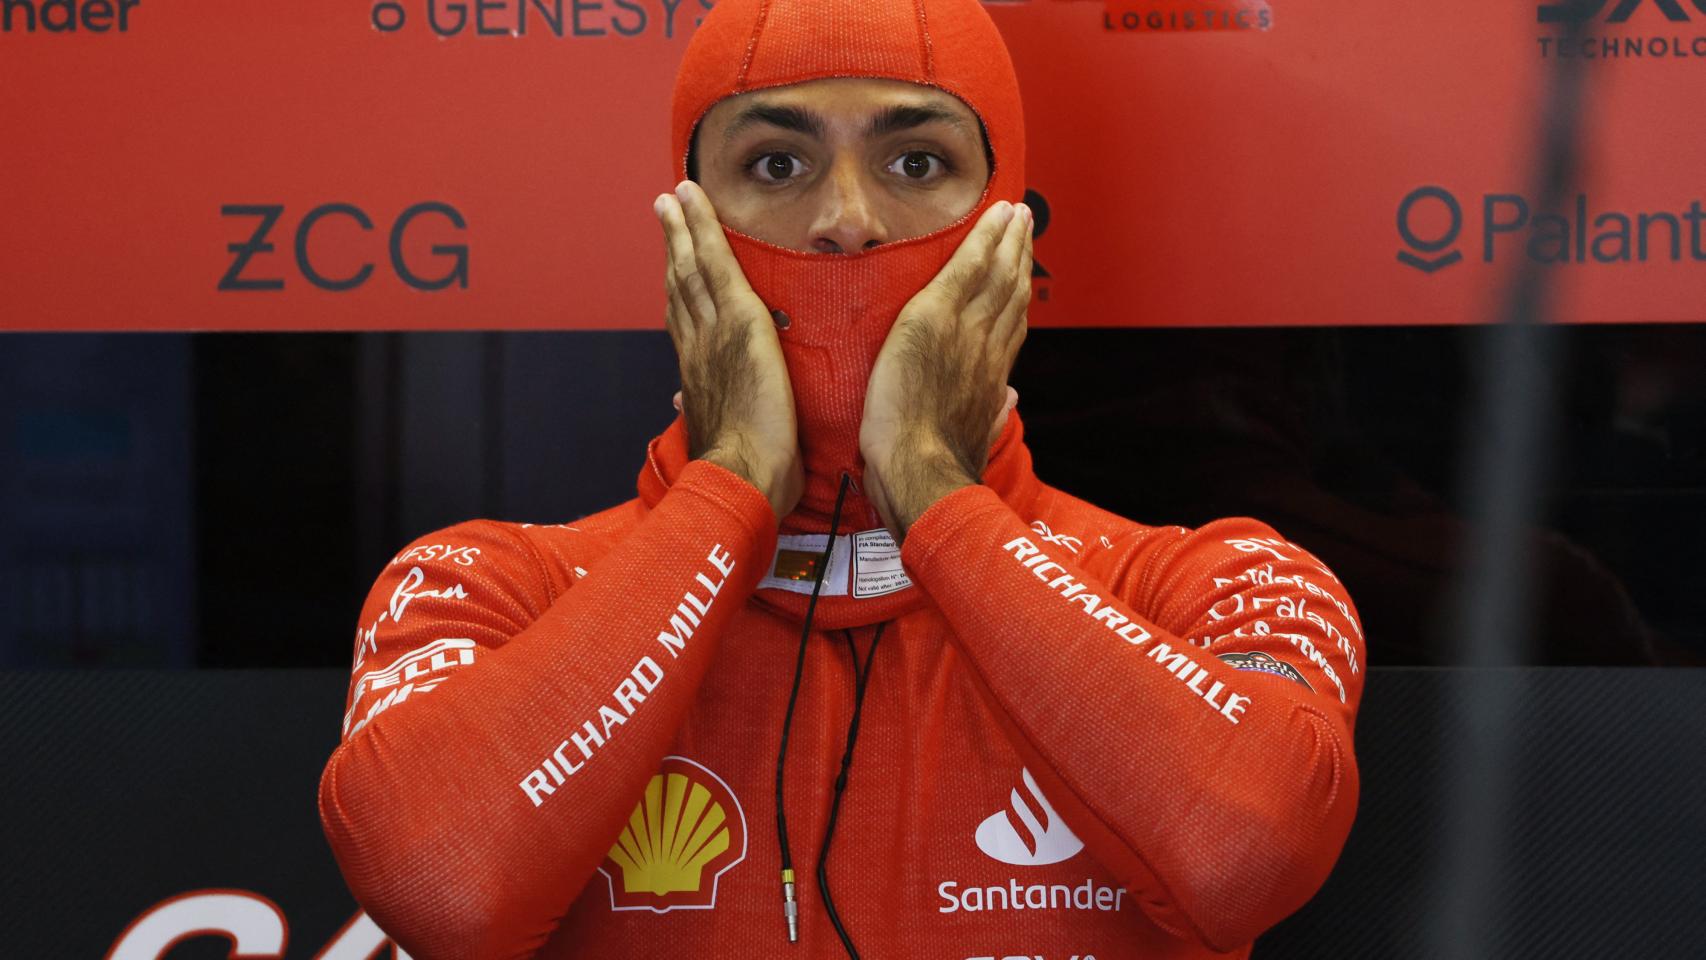 Carlos Sainz, en el box de Ferrari